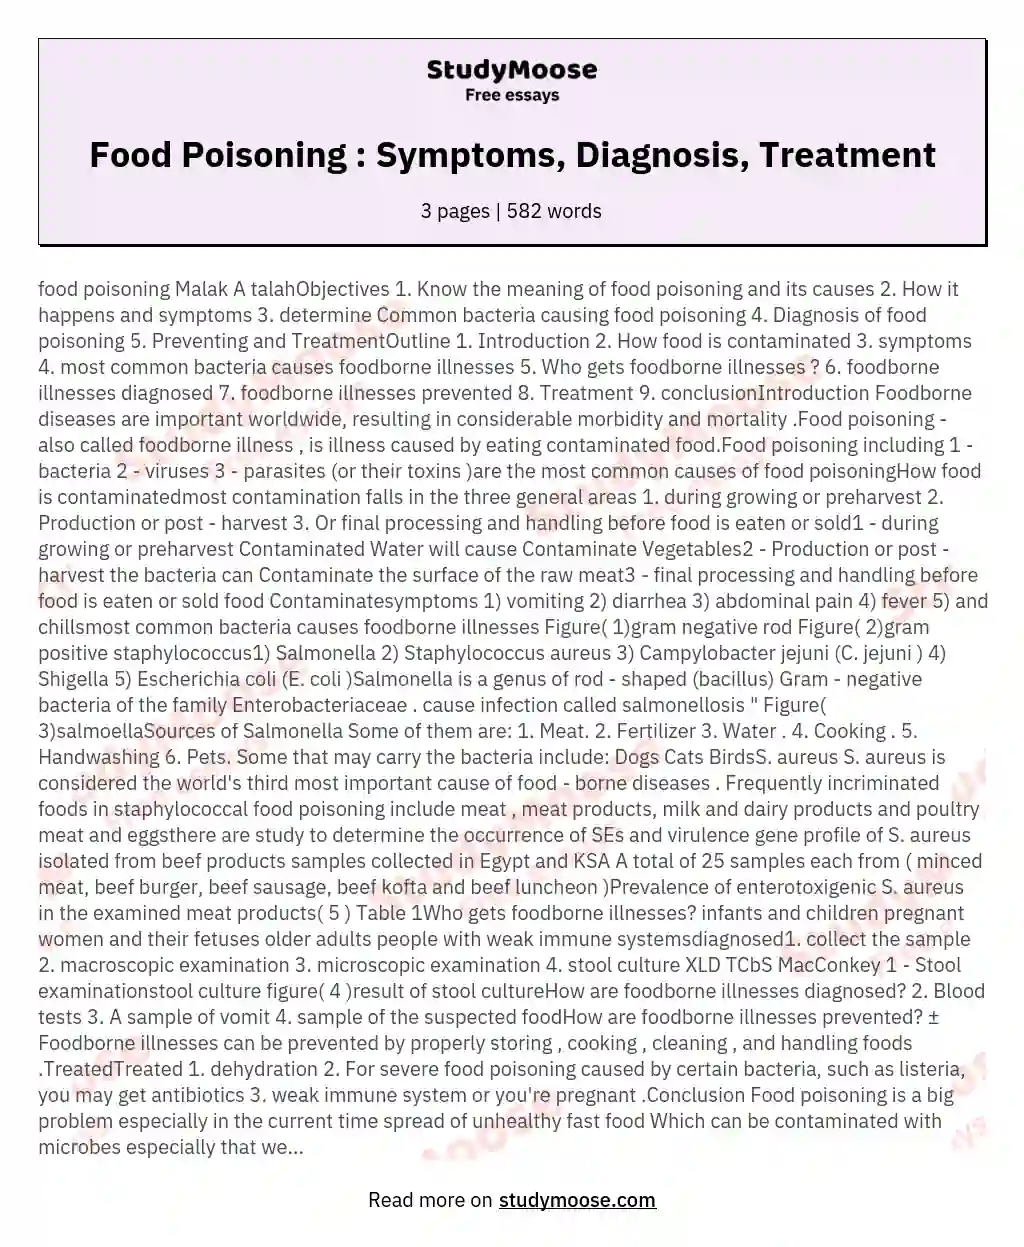 Food Poisoning : Symptoms, Diagnosis, Treatment